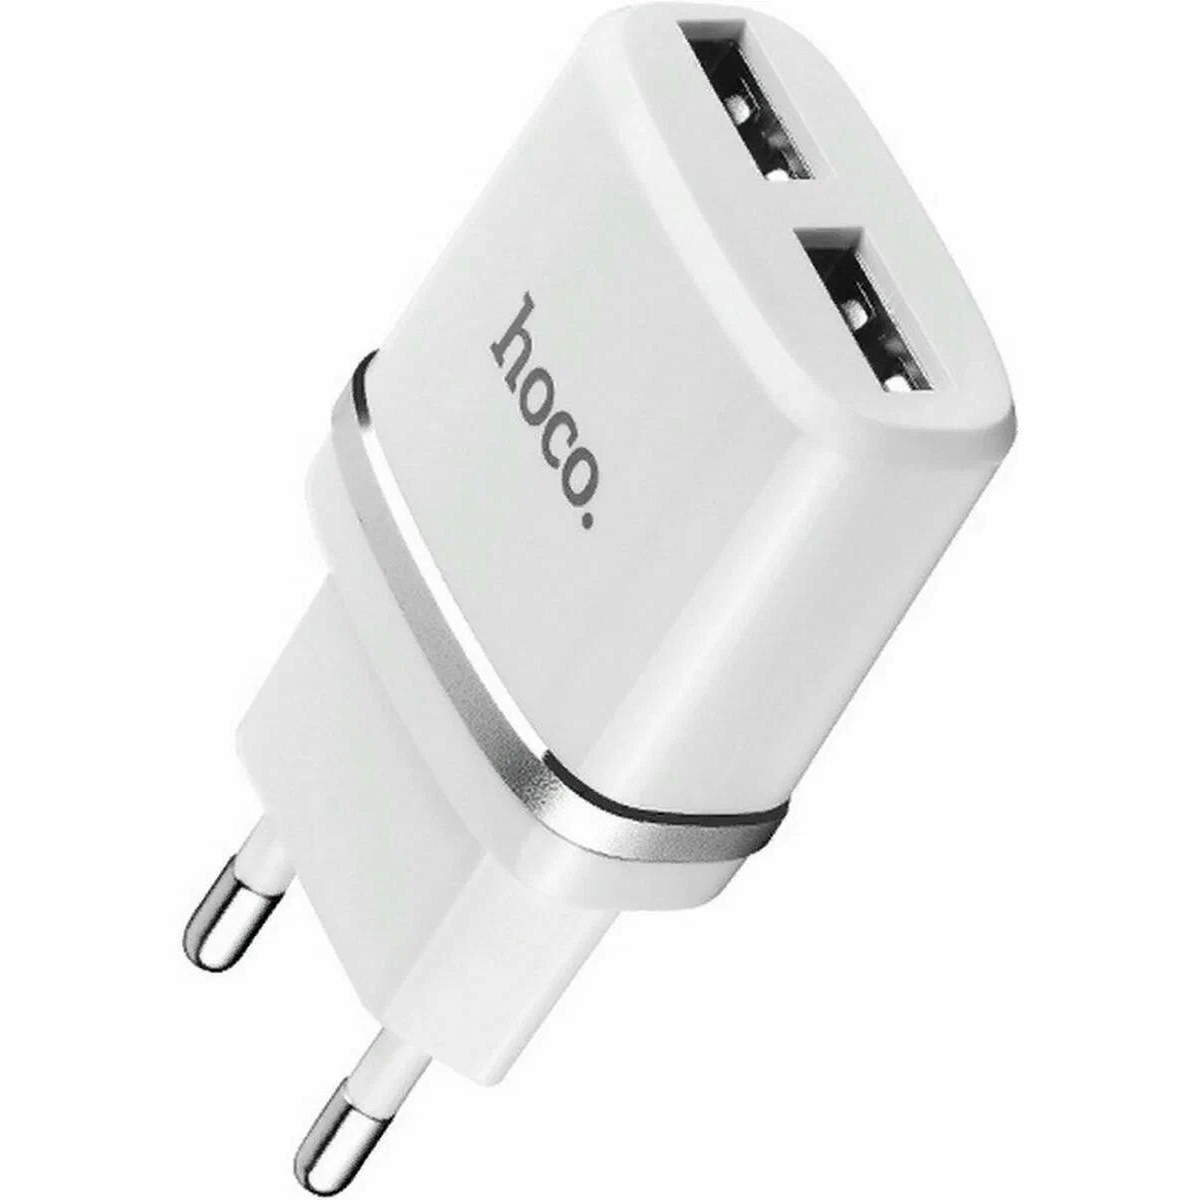 Сетевое зарядное устройство+кабель Micro-USB Hoco C12, 2USB, 2.4A, белый (47773) сетевое зарядное устройство maimi t7 smart charger kit usb порт кабель micro usb white